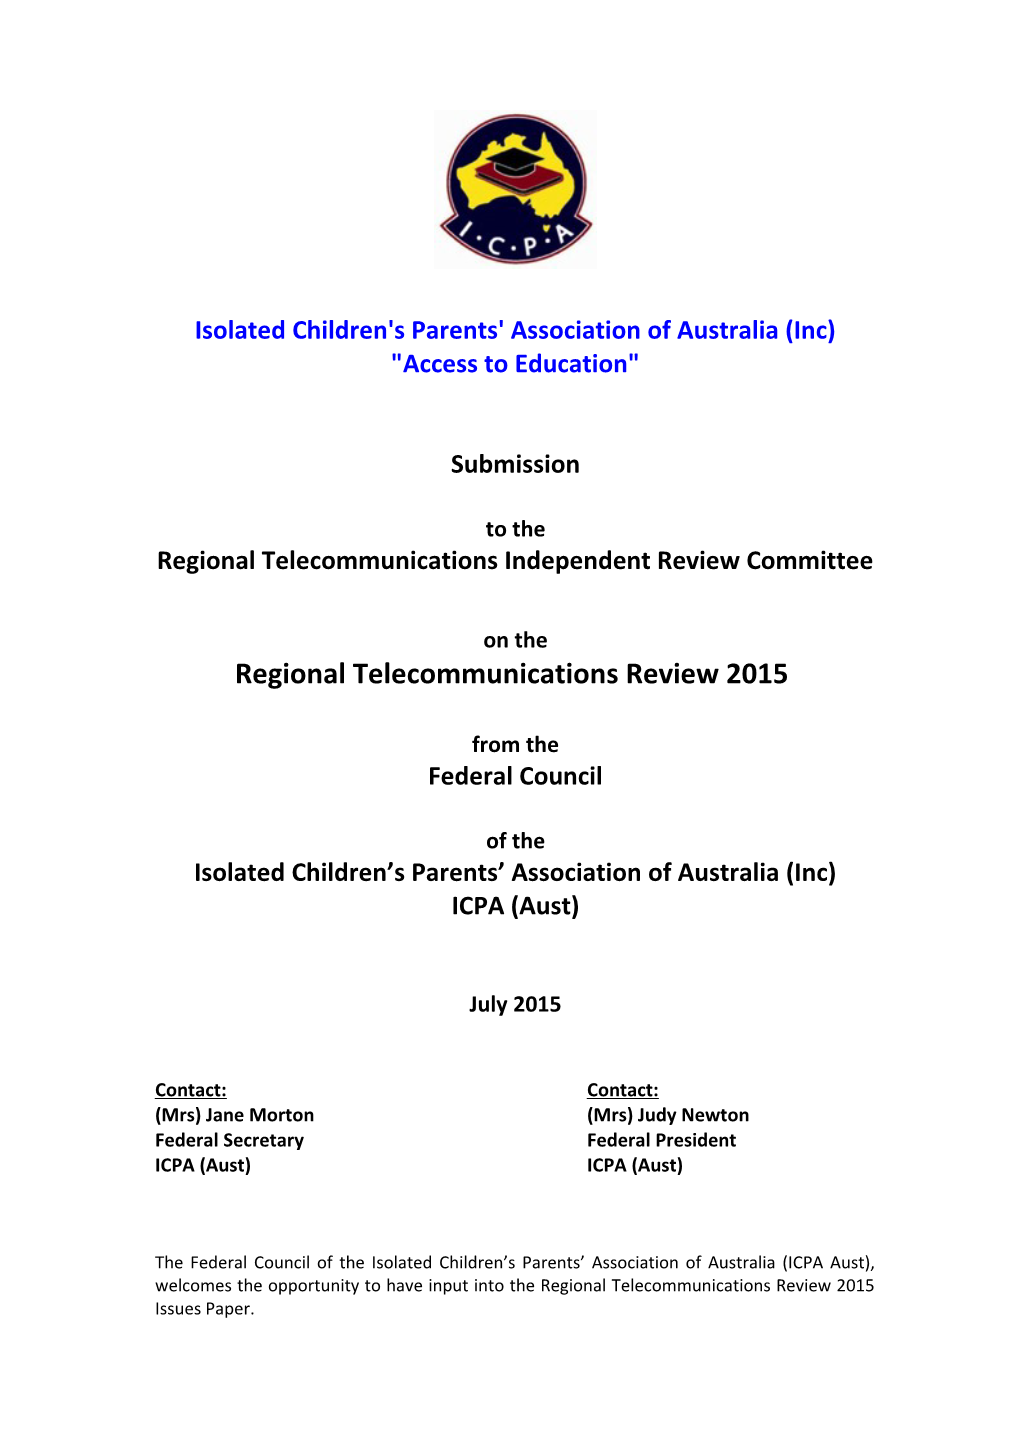 Isolated Children's Parents' Association of Australia - Public Submission RTIRC 2015